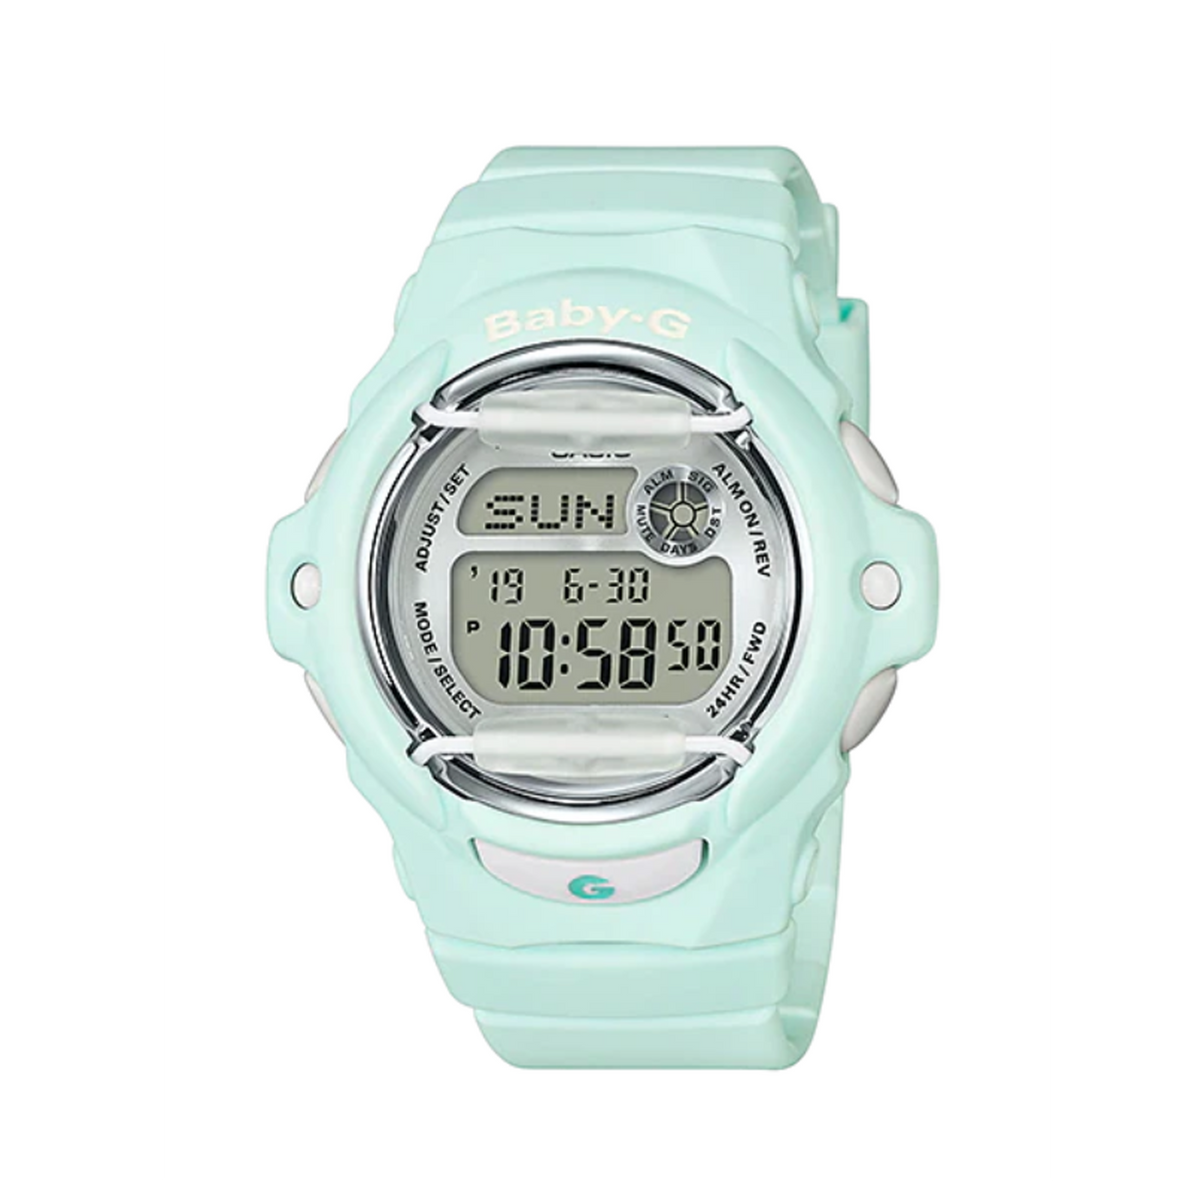 Casio Baby-G Women's Digital Watch BG169U-3D